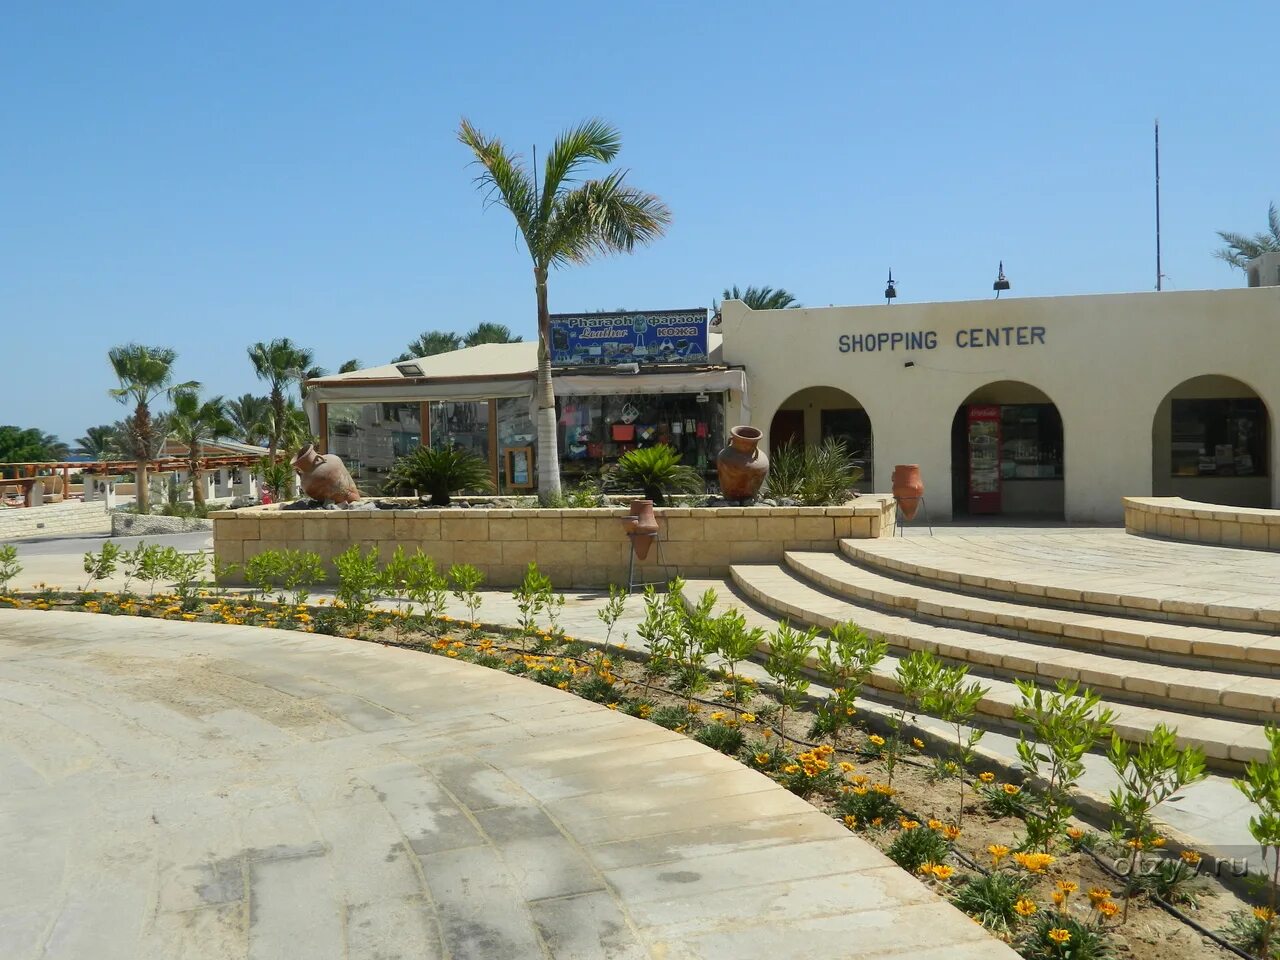 Ex coral beach rotana resort. Coral Beach Hotel Hurghada Египет Хургада. Отель Корал Бич ротана Резорт Египет Хургада. Coral Beach Rotana Resort 4 Египет Хургада. Ротана Хургада отель Корал Бич.